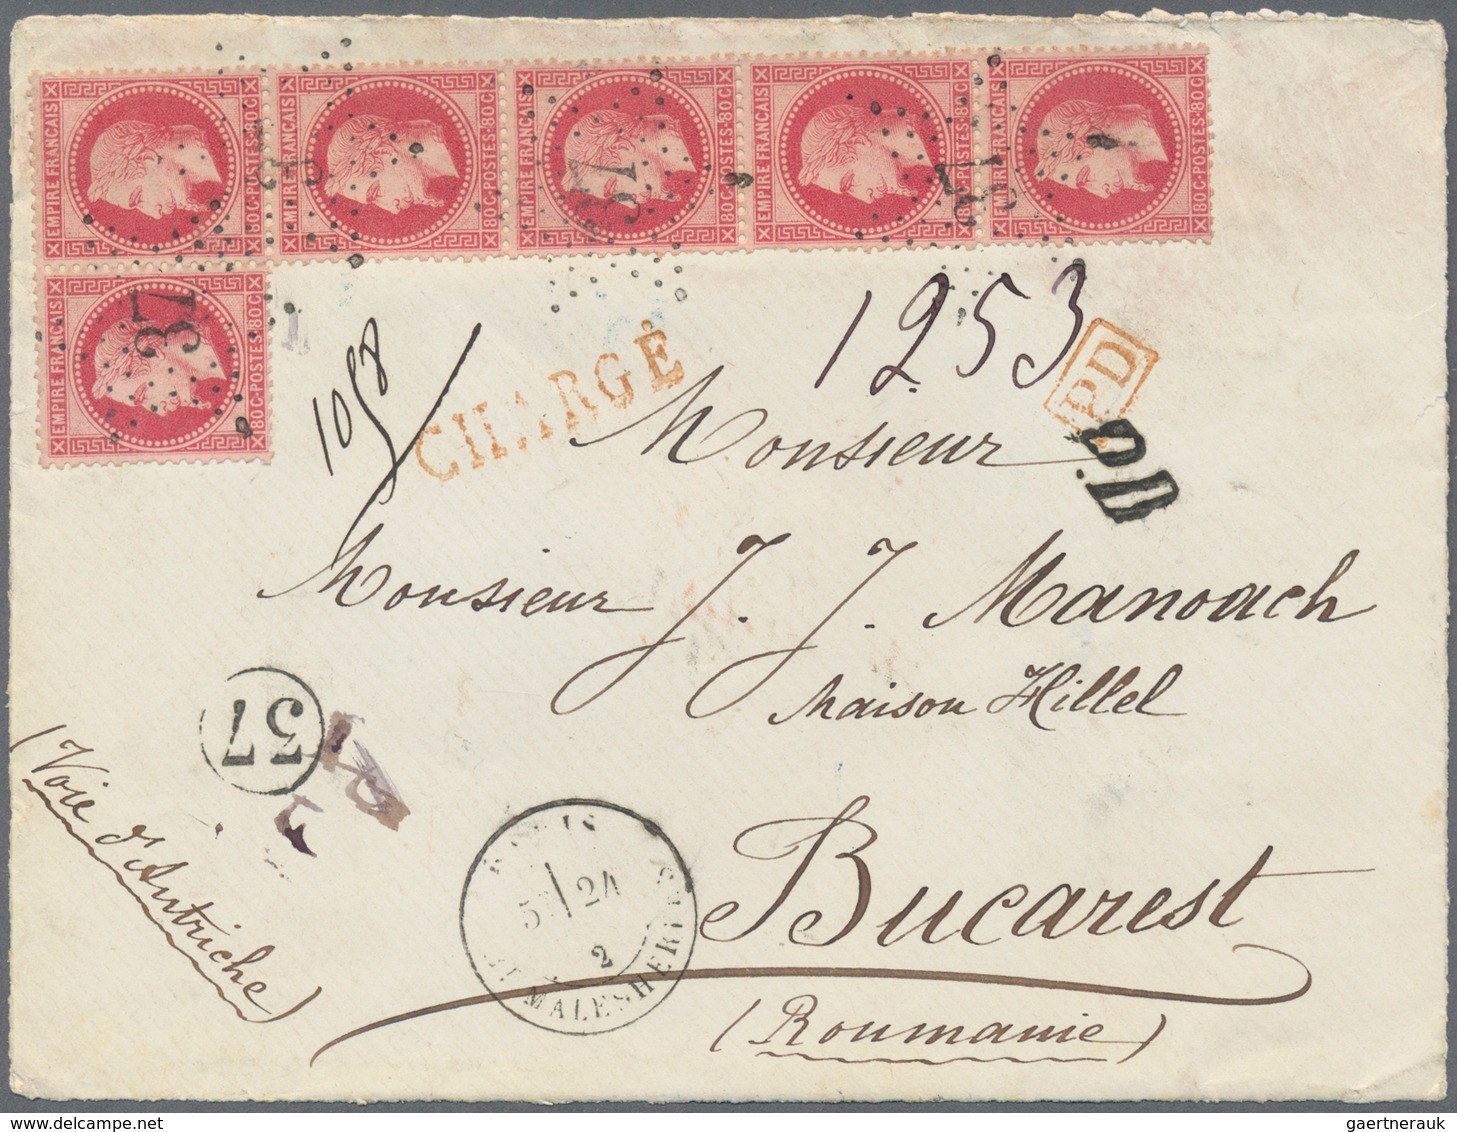 Rumänien: 1872-75 ca.: Correspondence from Paris to E. Hillel Manoach, Bucharest containing 22 front